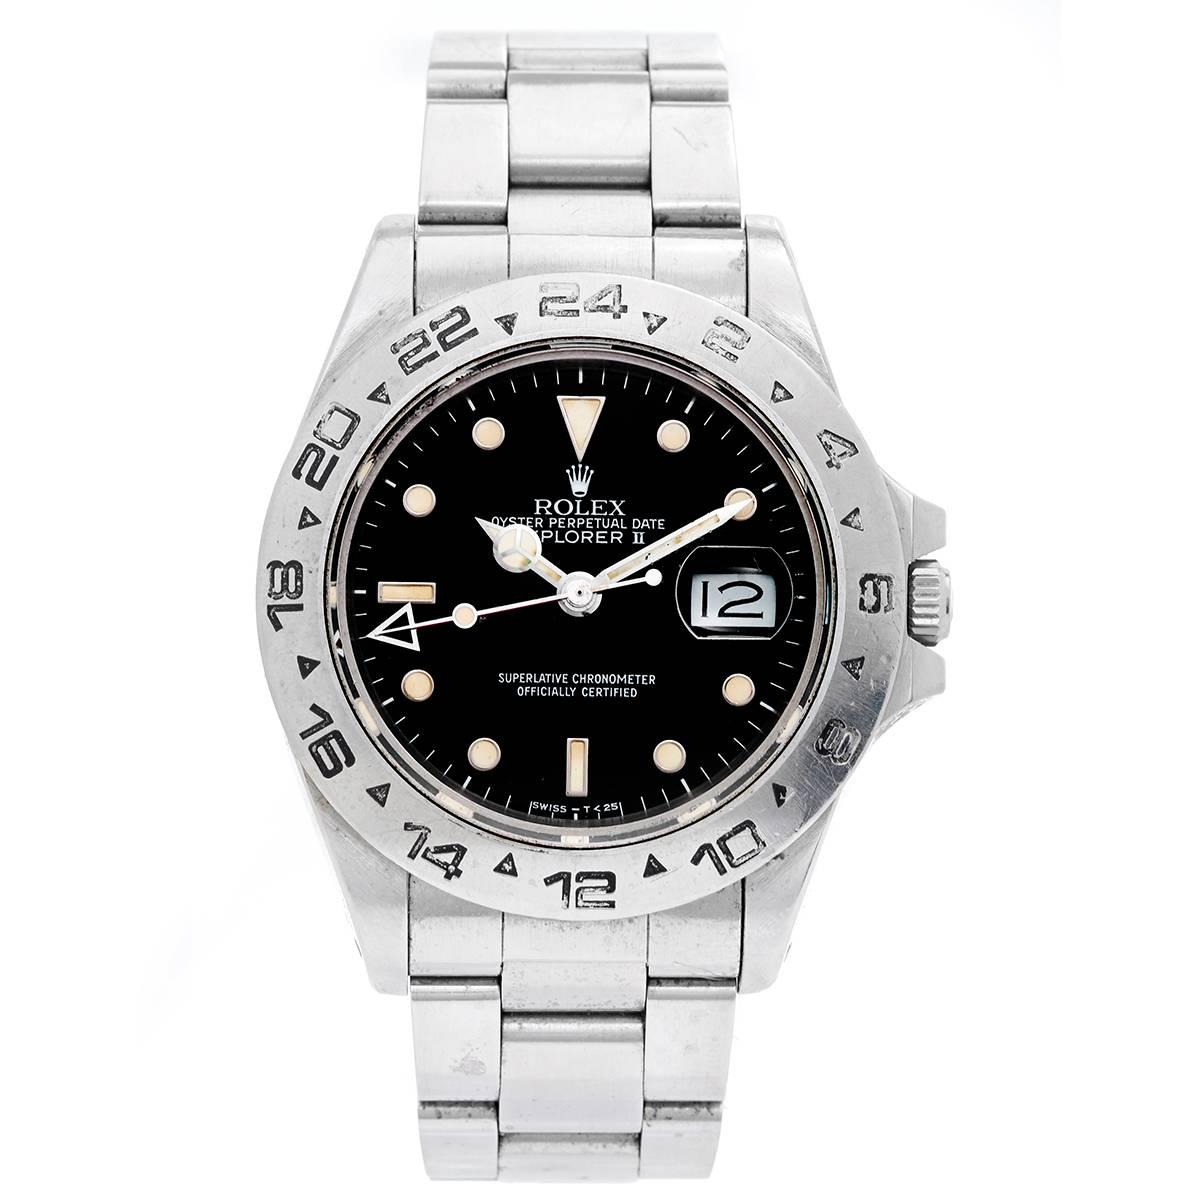 Rolex Stainless steel Explorer II Oyster bracelet Automatic Wristwatch Ref 16550